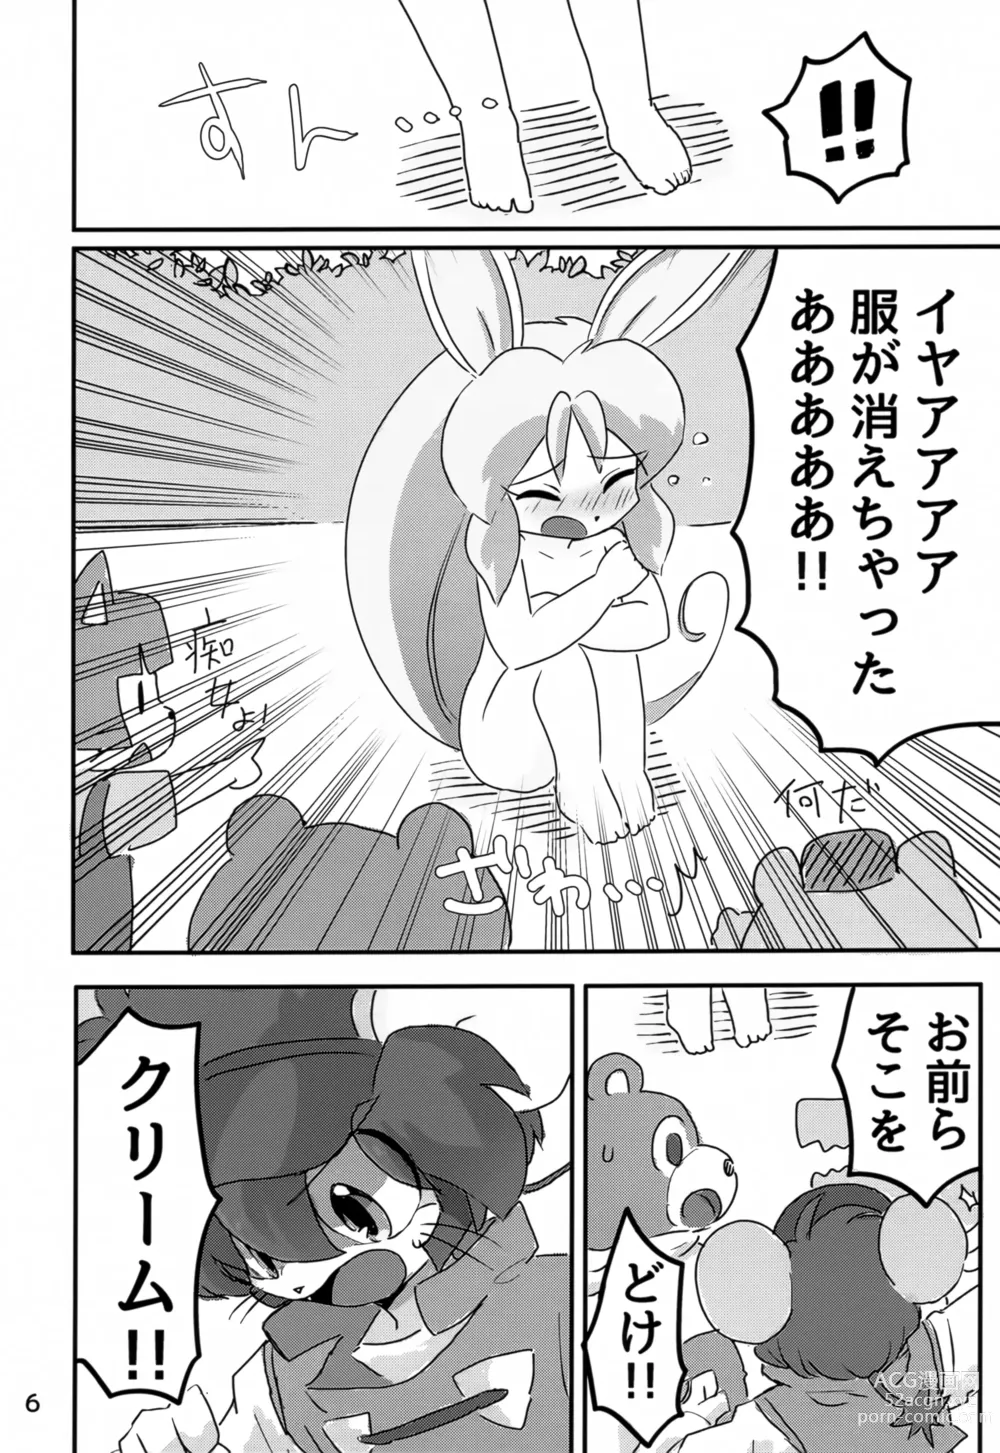 Page 5 of doujinshi Juunishi Lovers